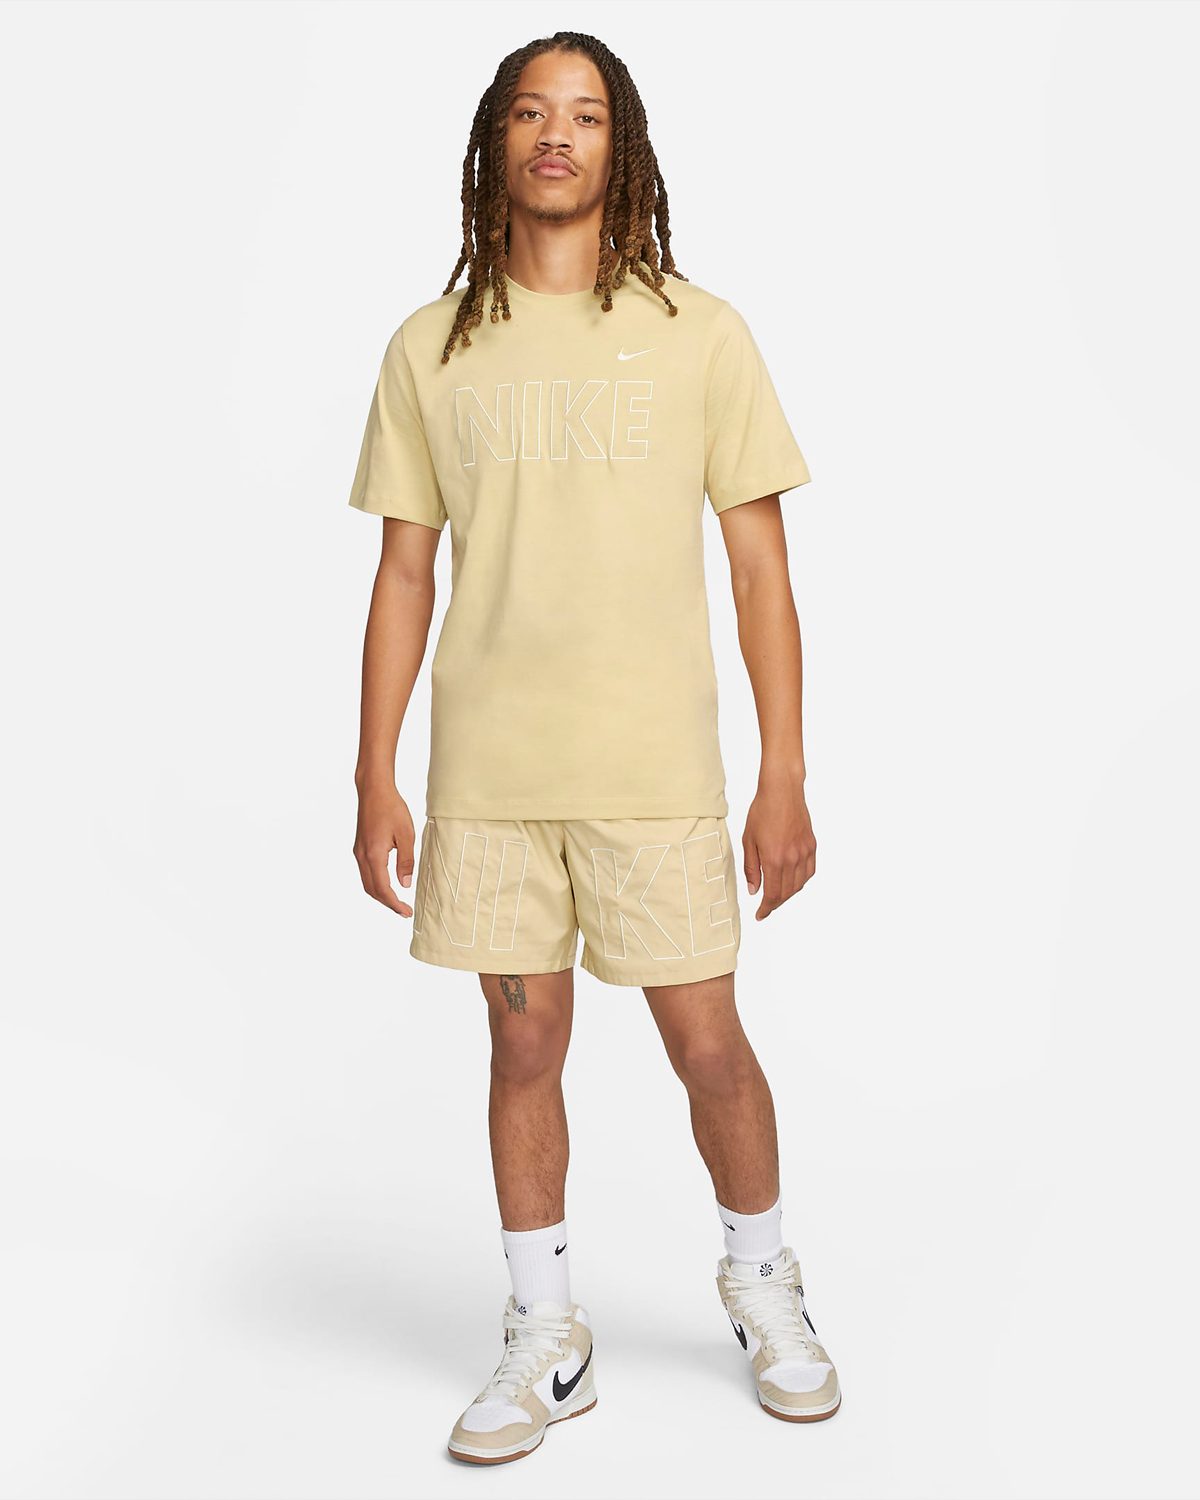 Nike-Sportswear-Team-Gold-T-Shirt-Shorts-Outfit